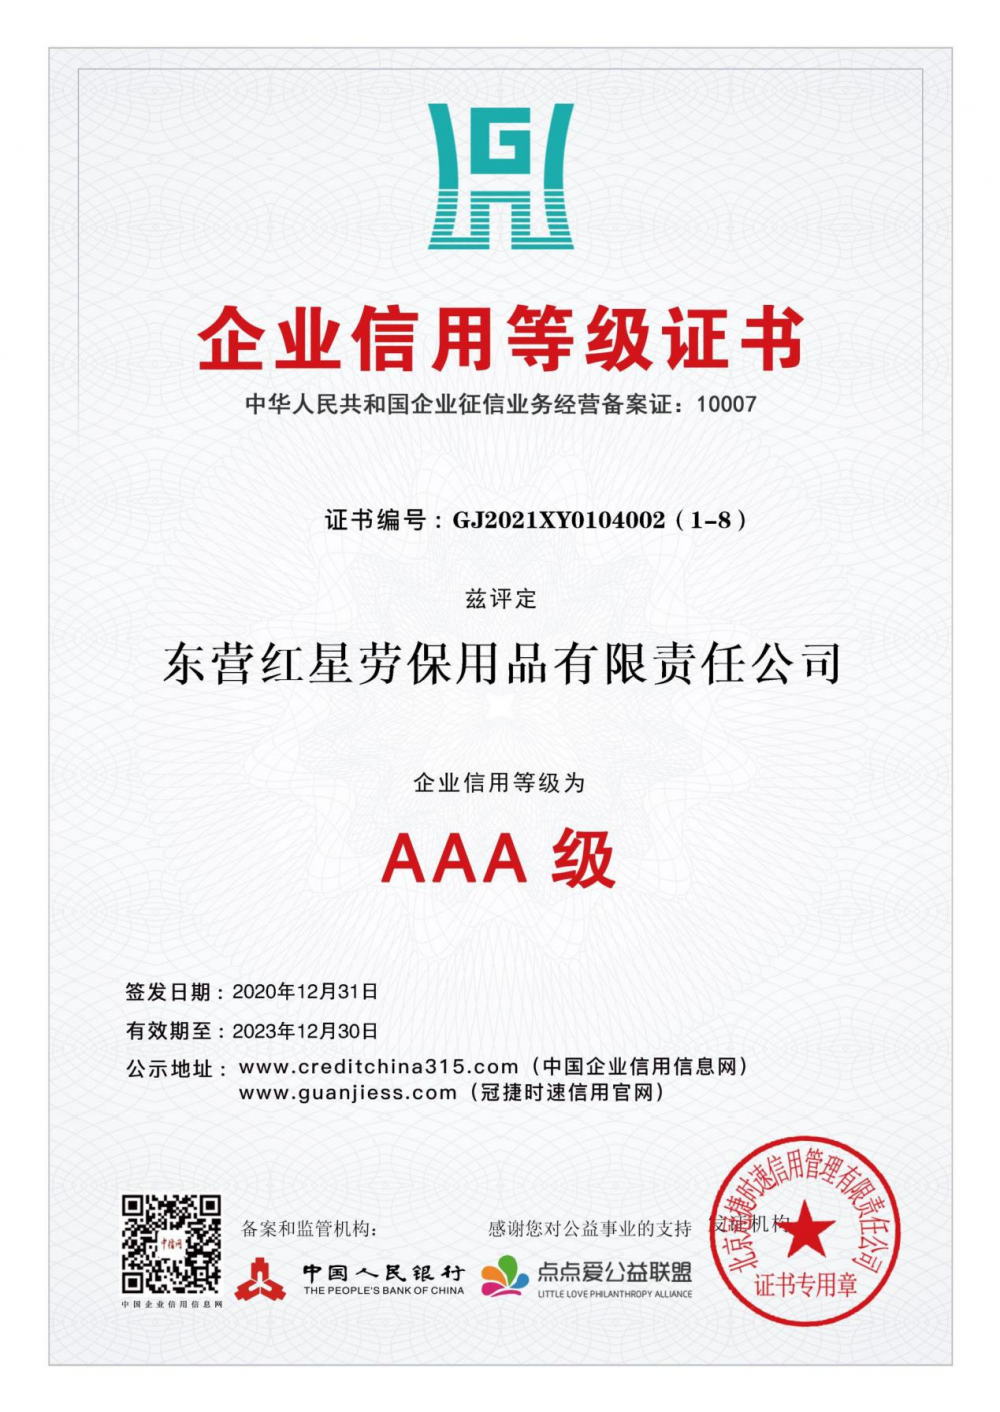 Enterprise credit grade AAA certification